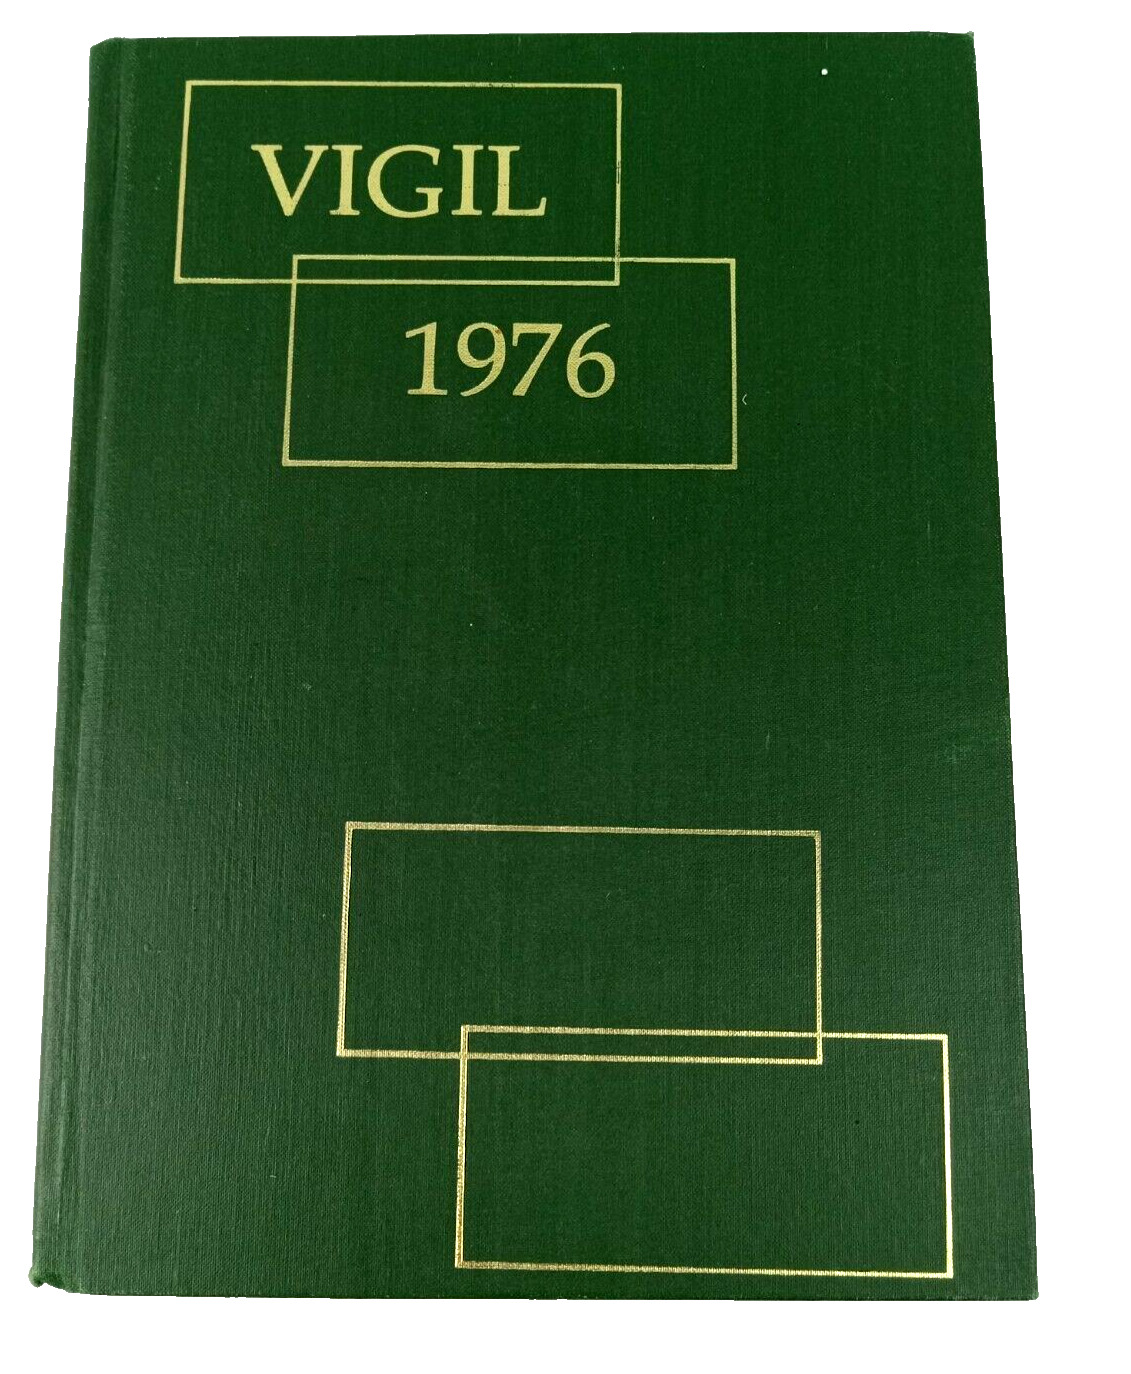 1976 Central Catholic High School Canton Ohio VIGIL 76 Year Book Annual Yearbook